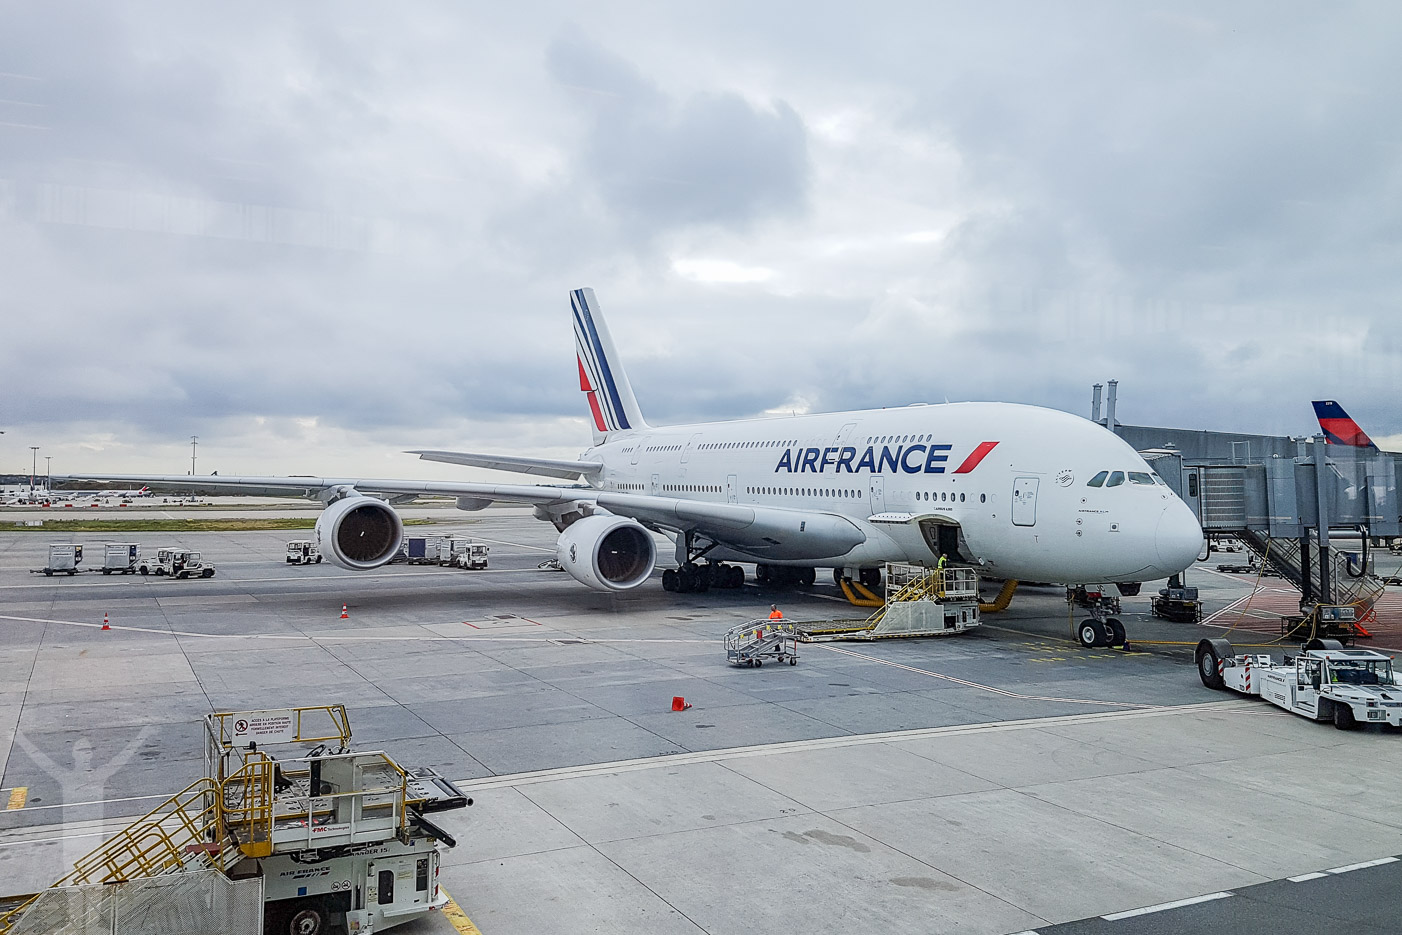 Air France A380, F-HPJC i Paris